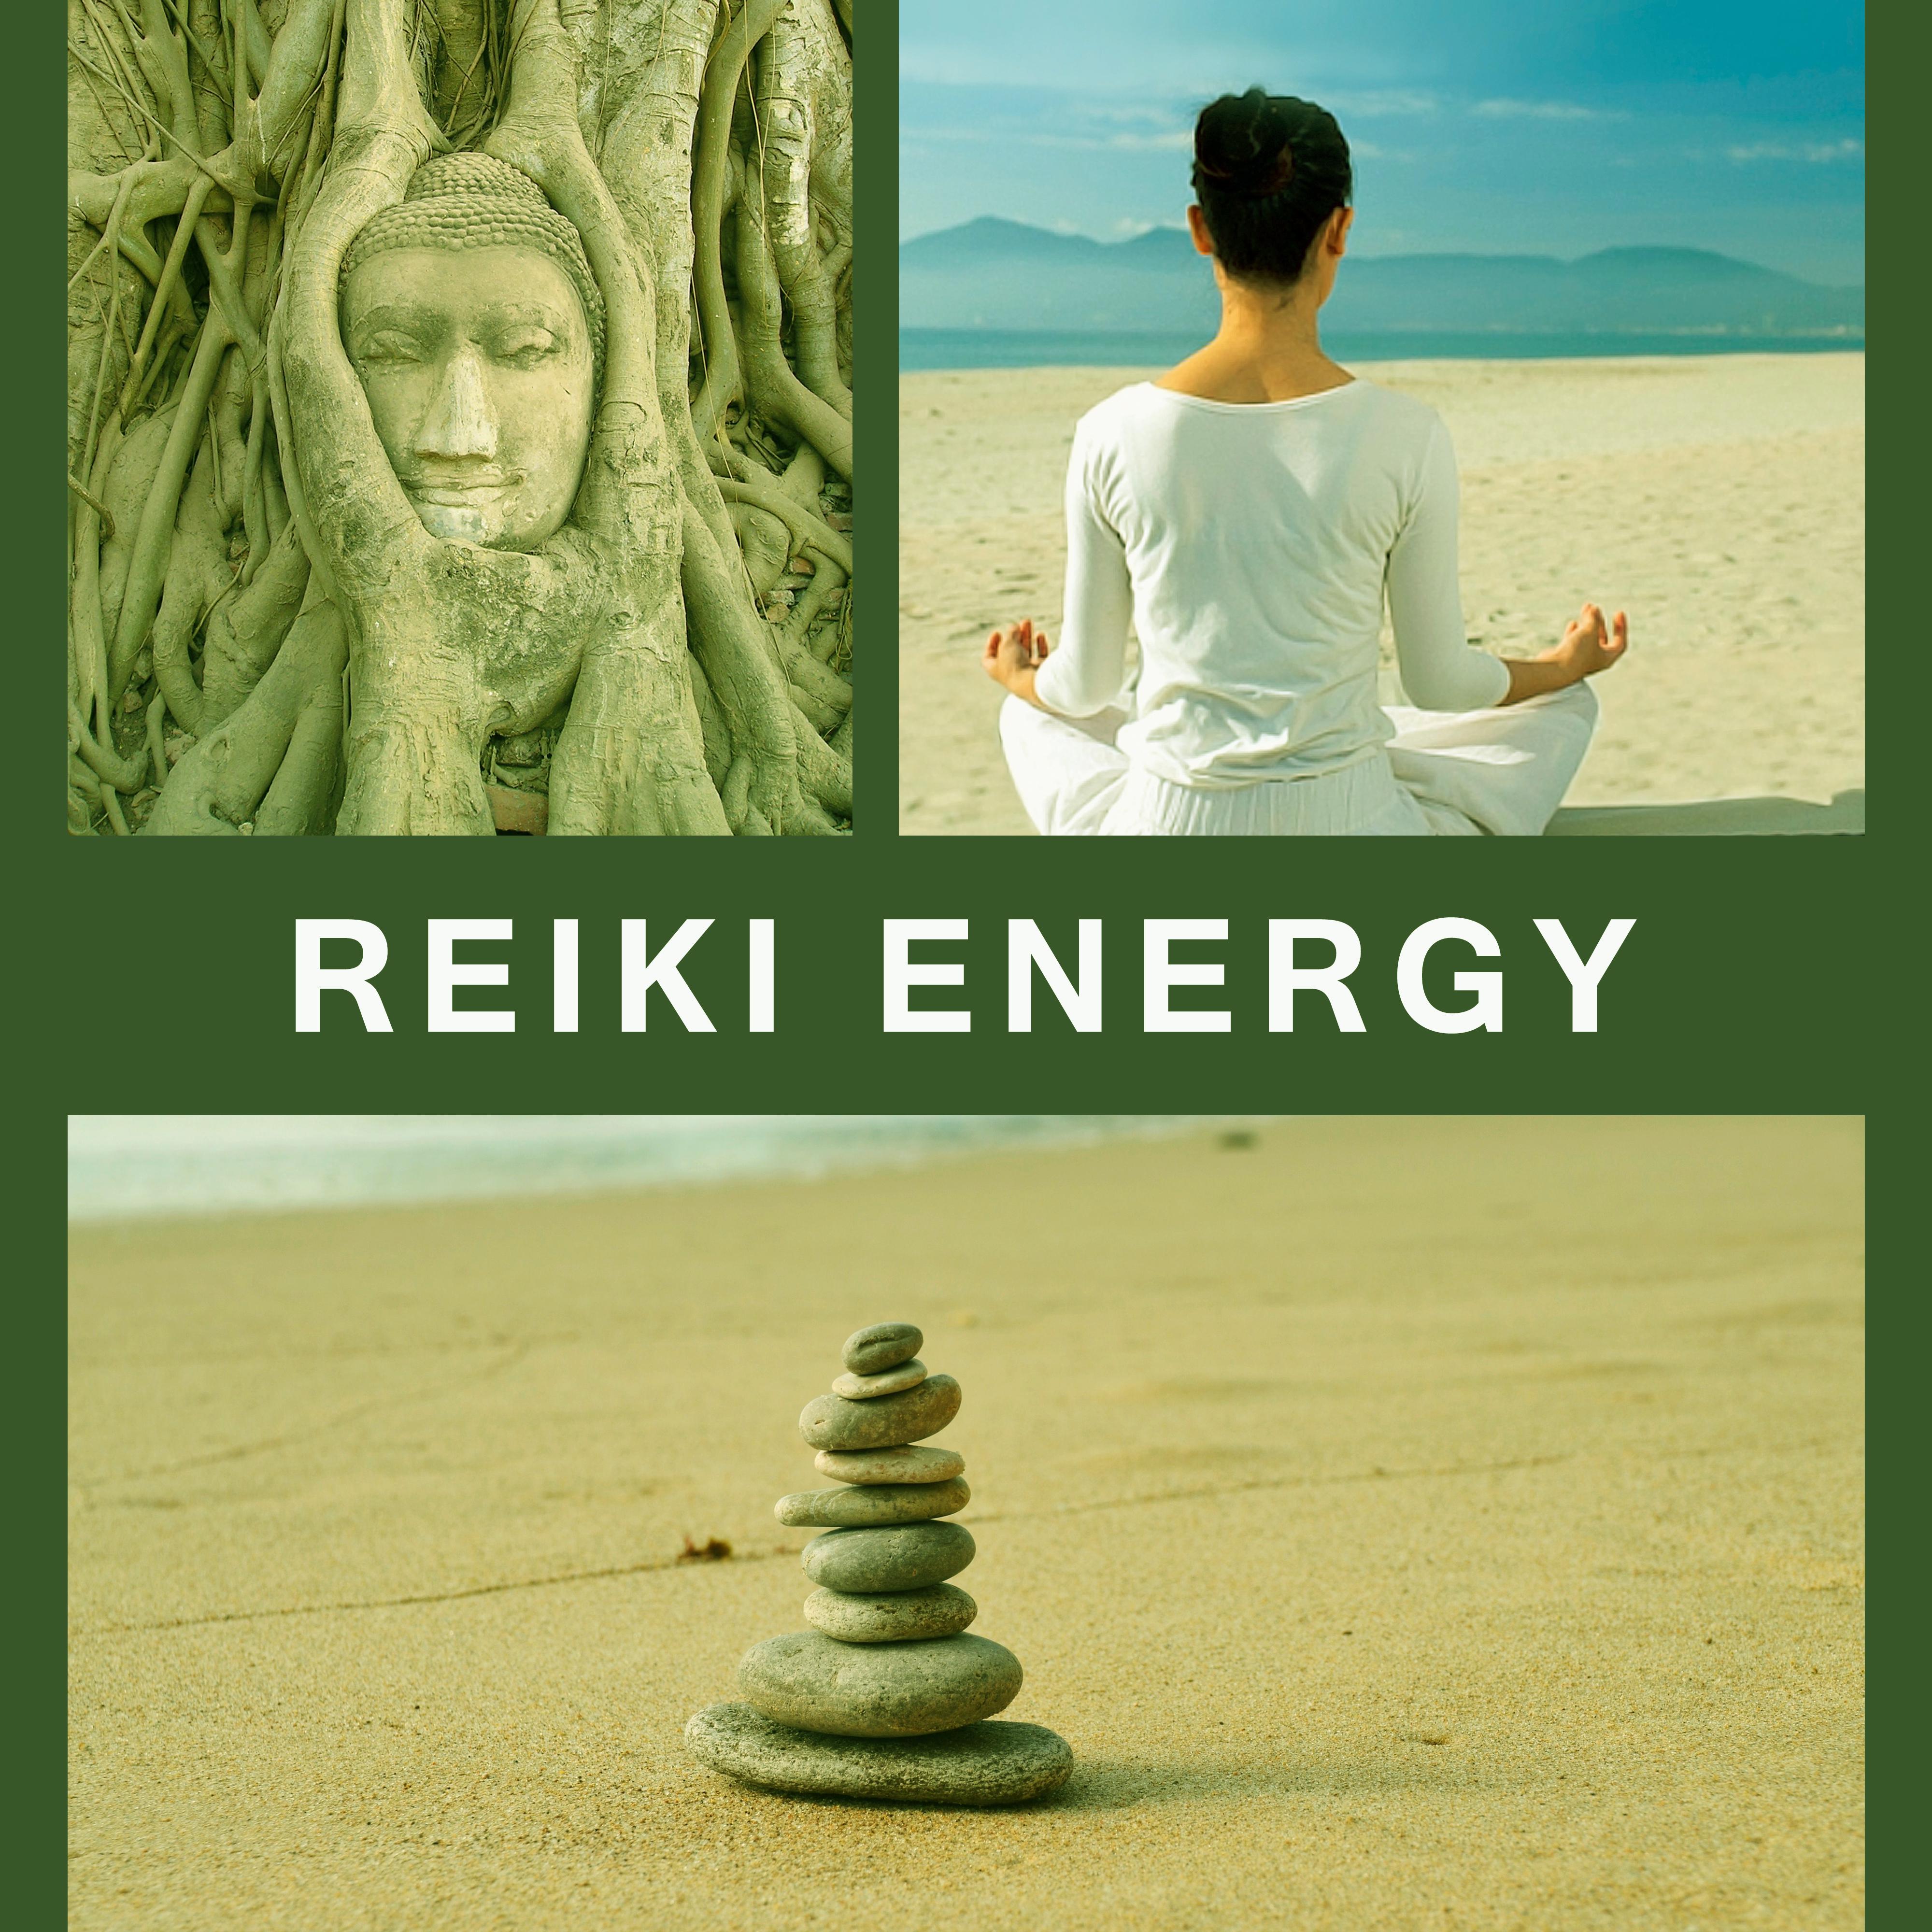 Reiki Energy  Training Yoga, Peaceful Music for Healing, Meditation, Relaxation, Yoga Zone, Spirituality, Soft Mindfulness, Zen